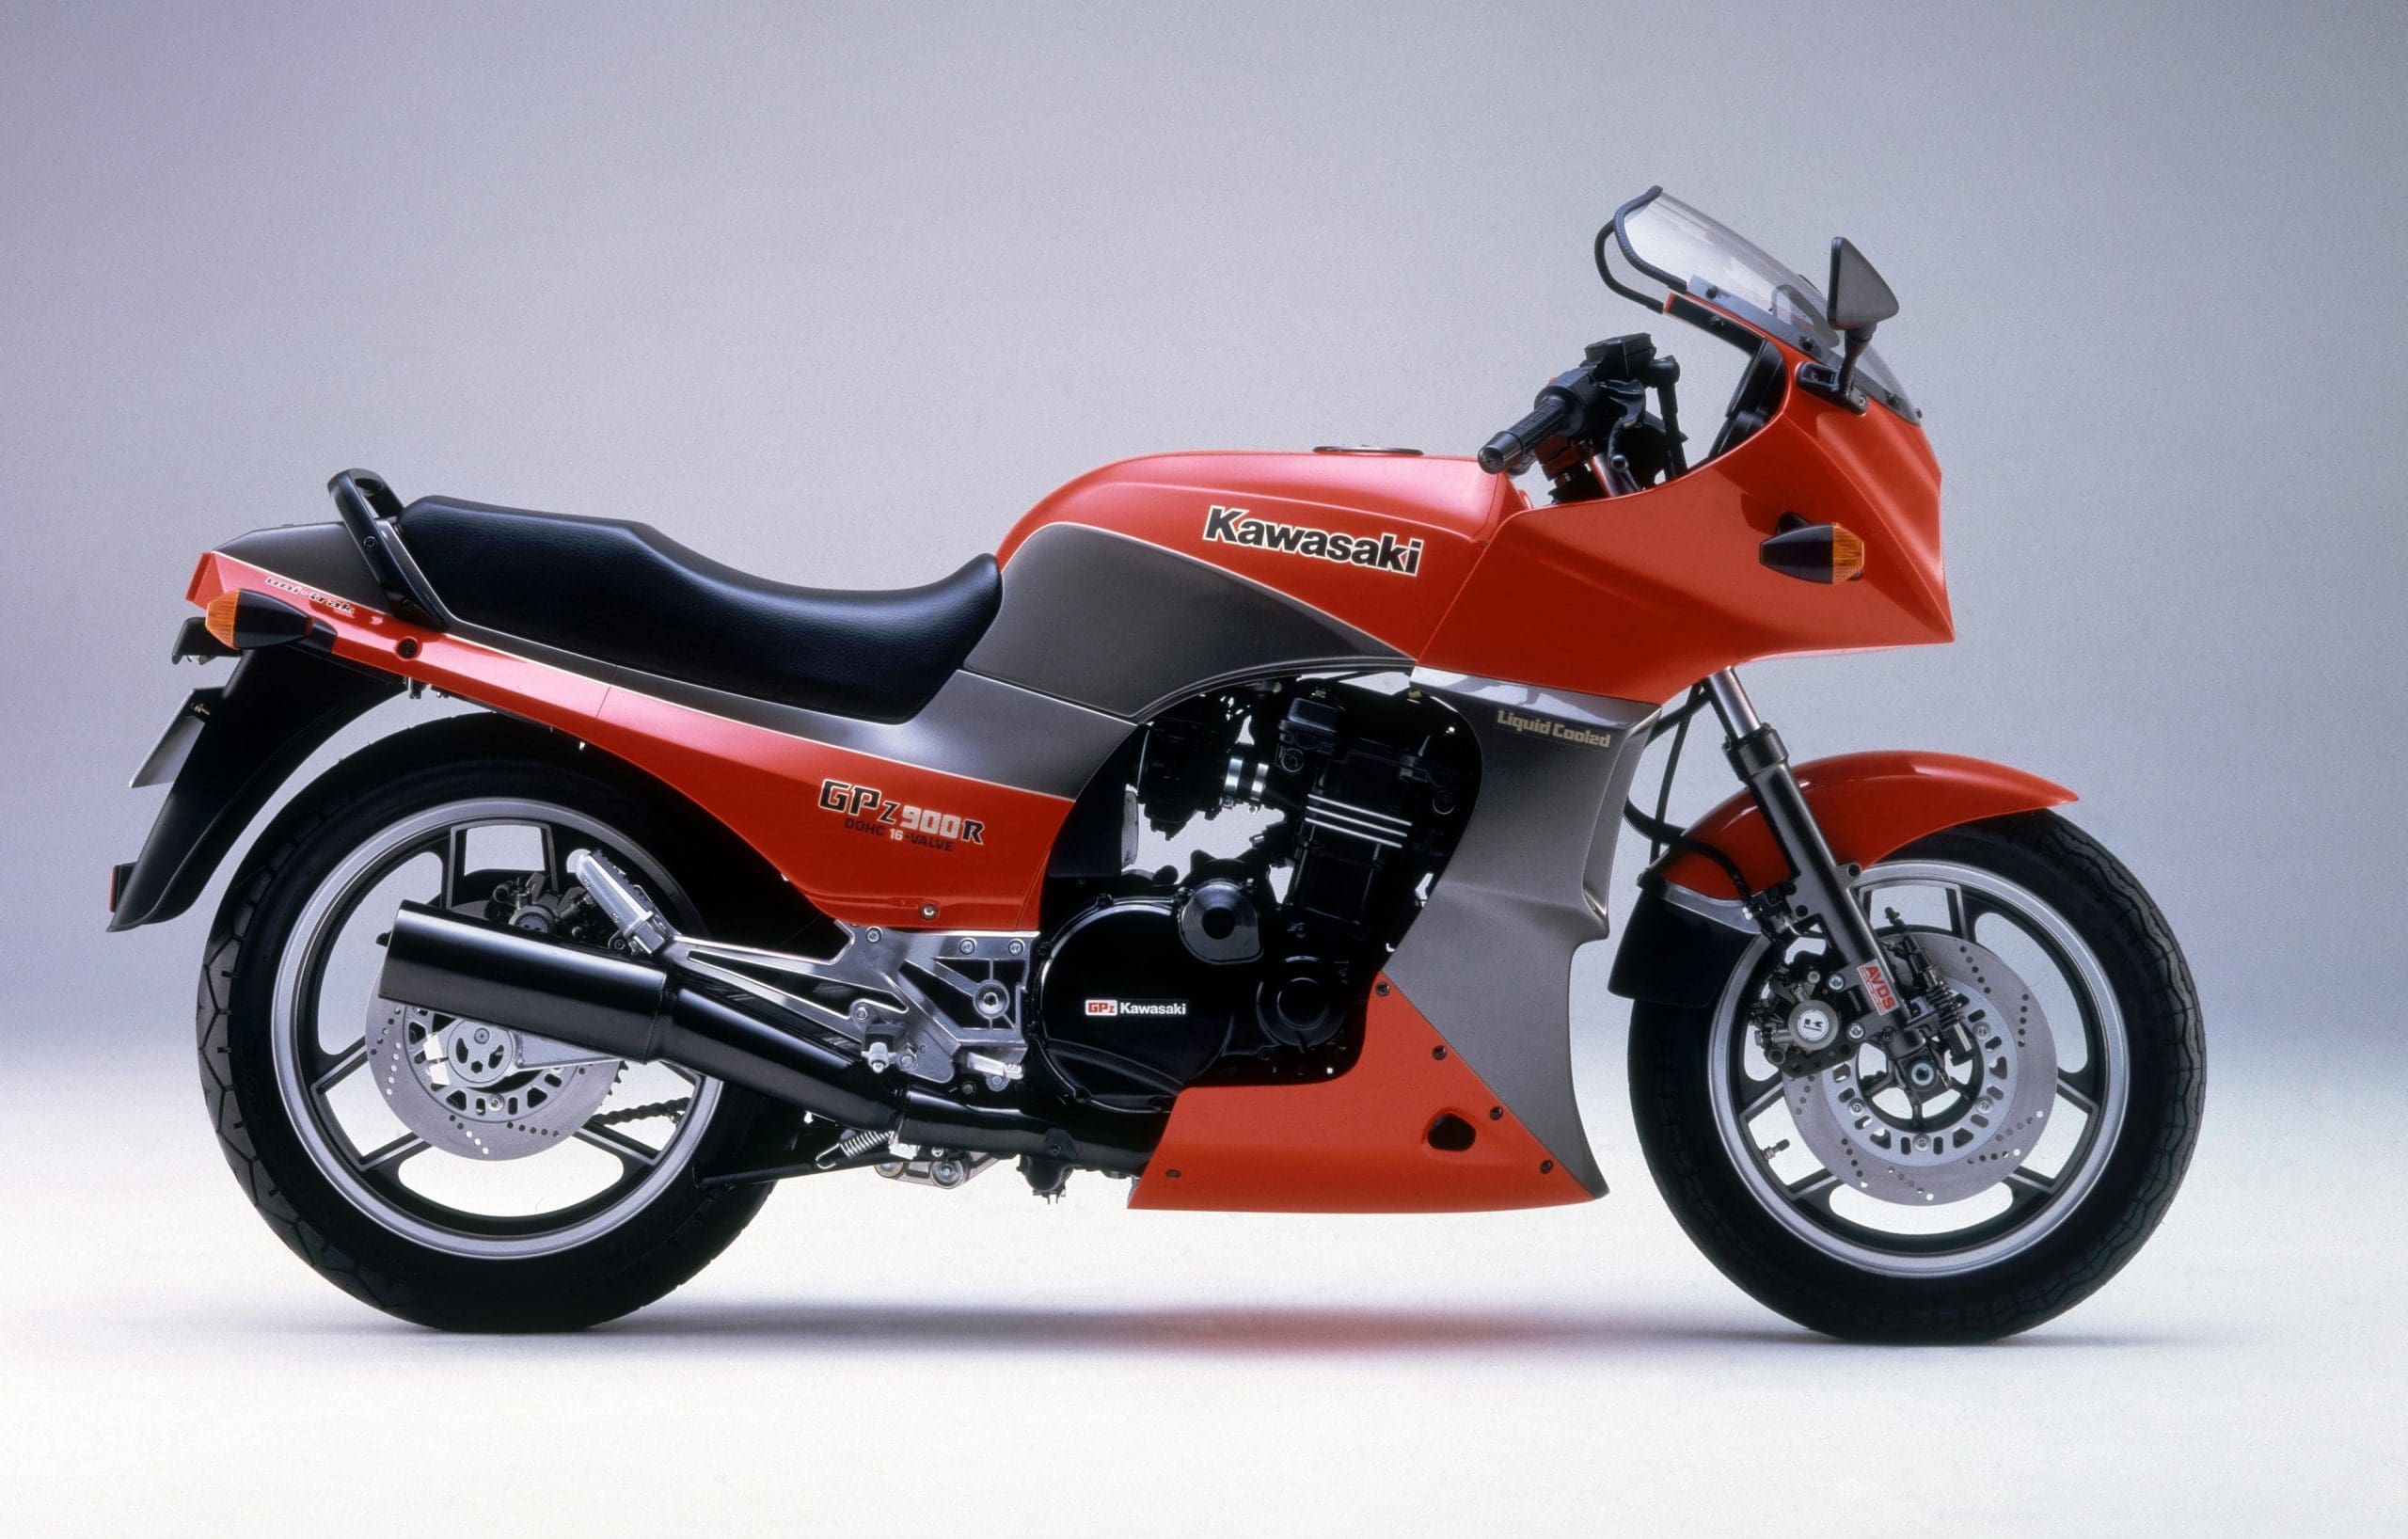 Studio shot of Kawasaki GPZ900R motorcycle from the 1980s